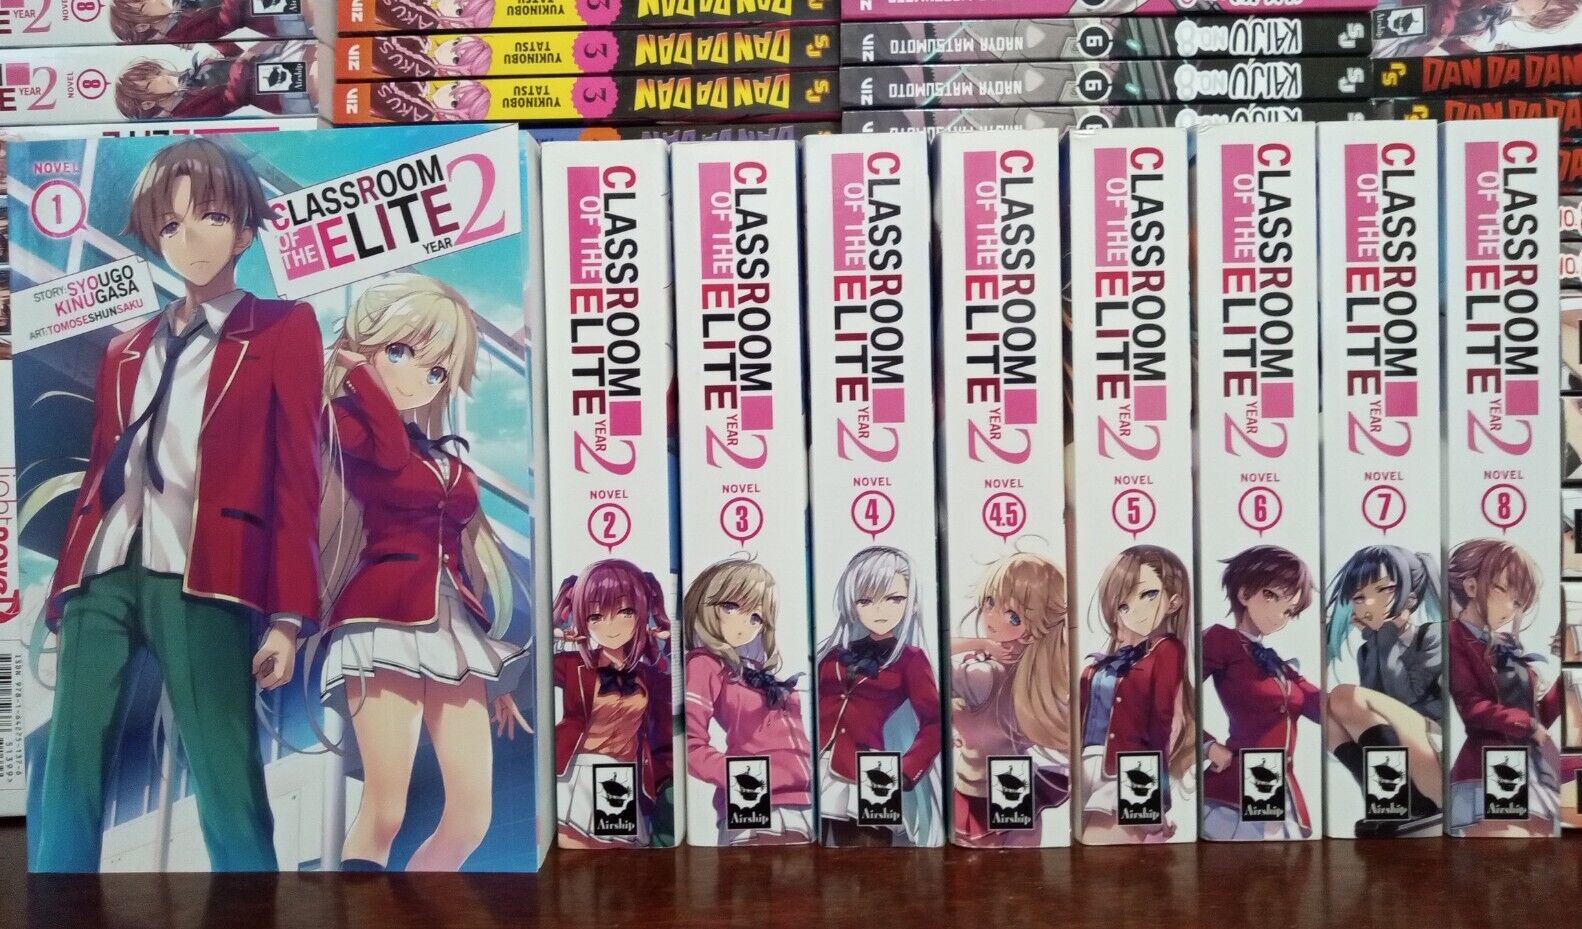 Classroom of the Elite Year 2 Vol. 1-8 Complete Light Novel Set *NEW*, *9 Books*